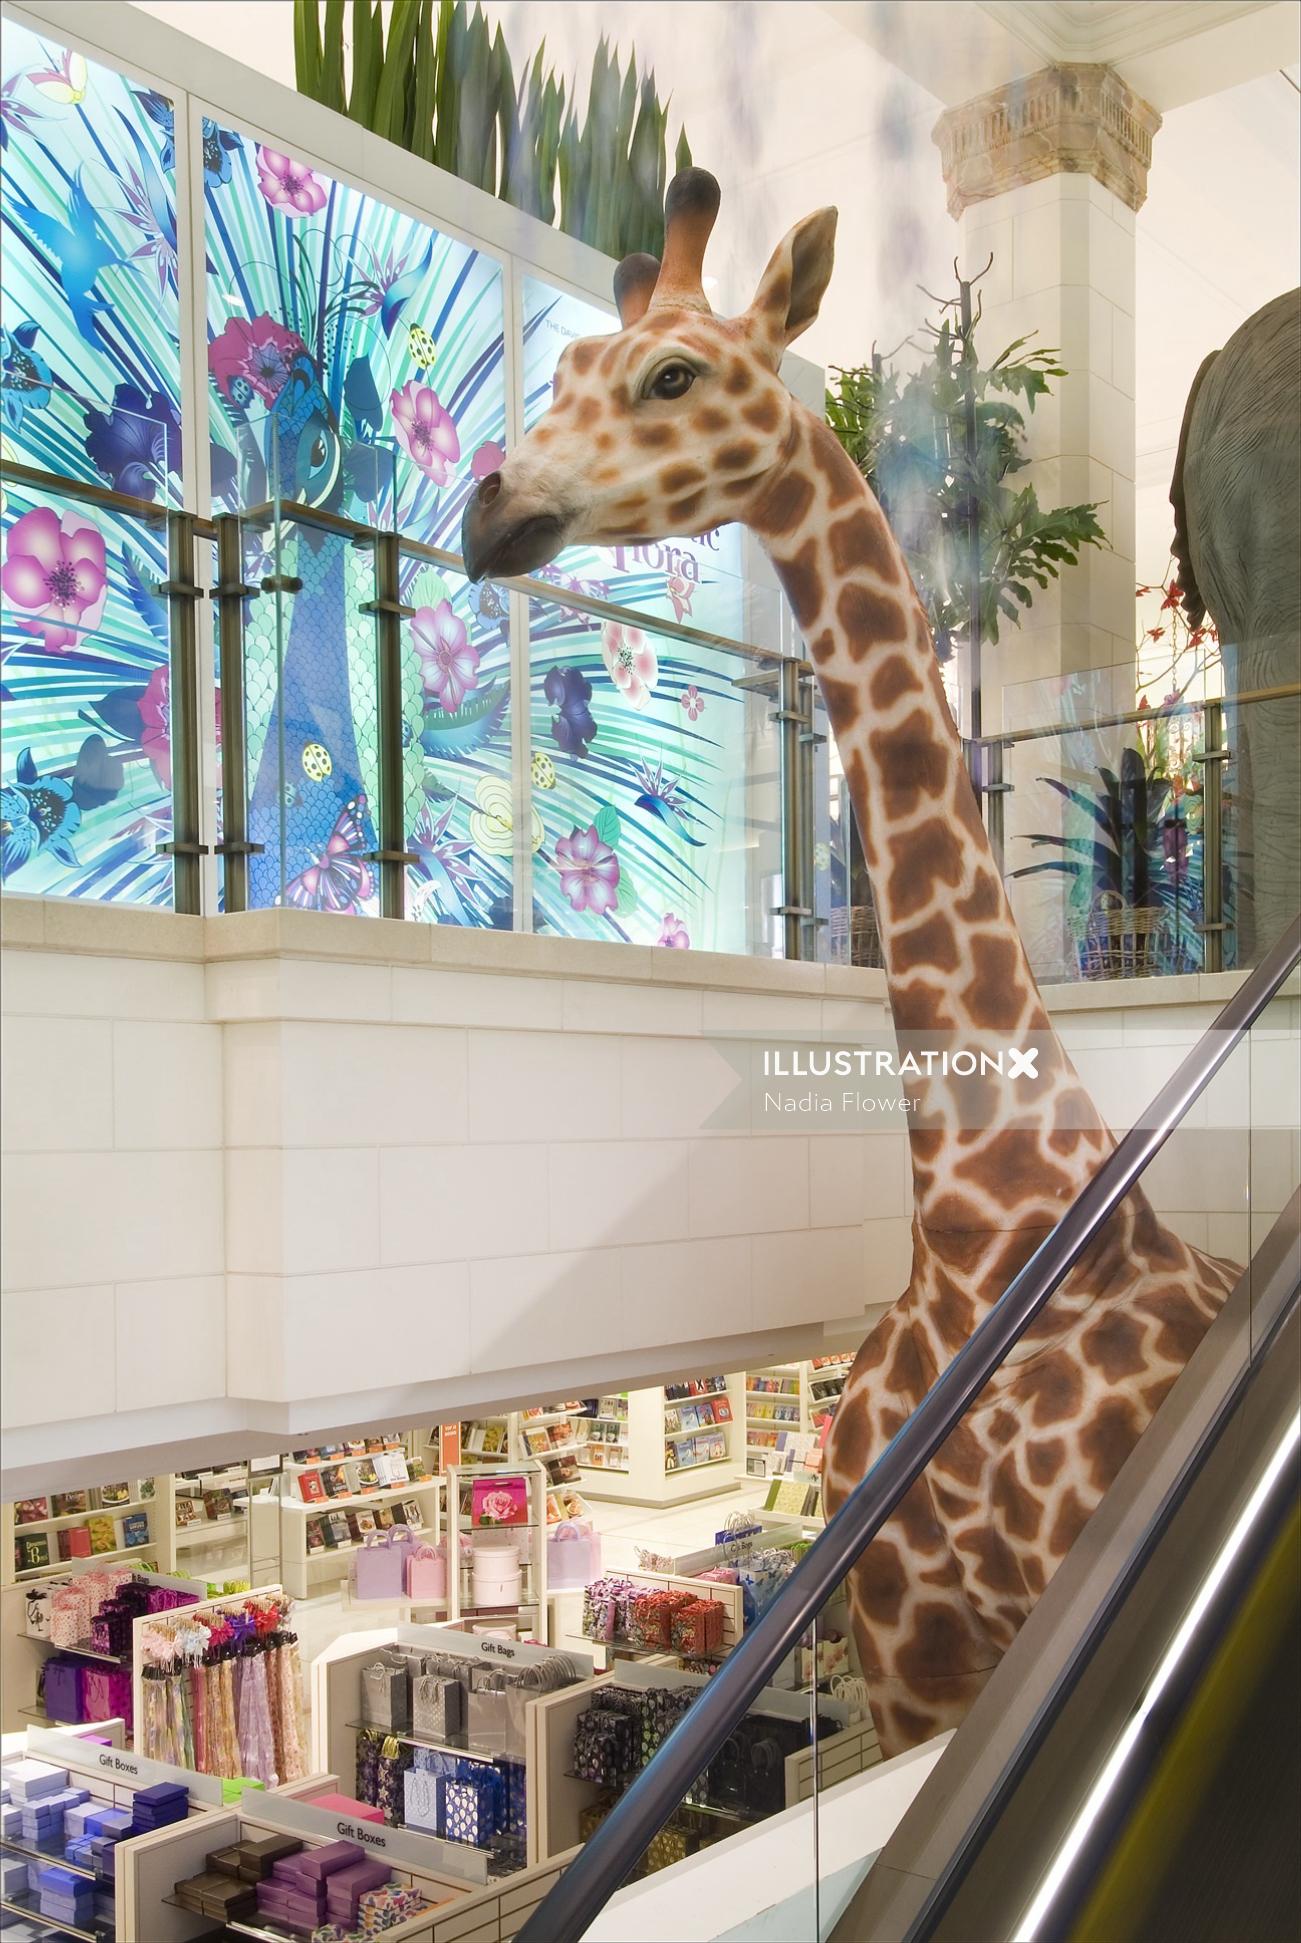 Animals giraffee in the building